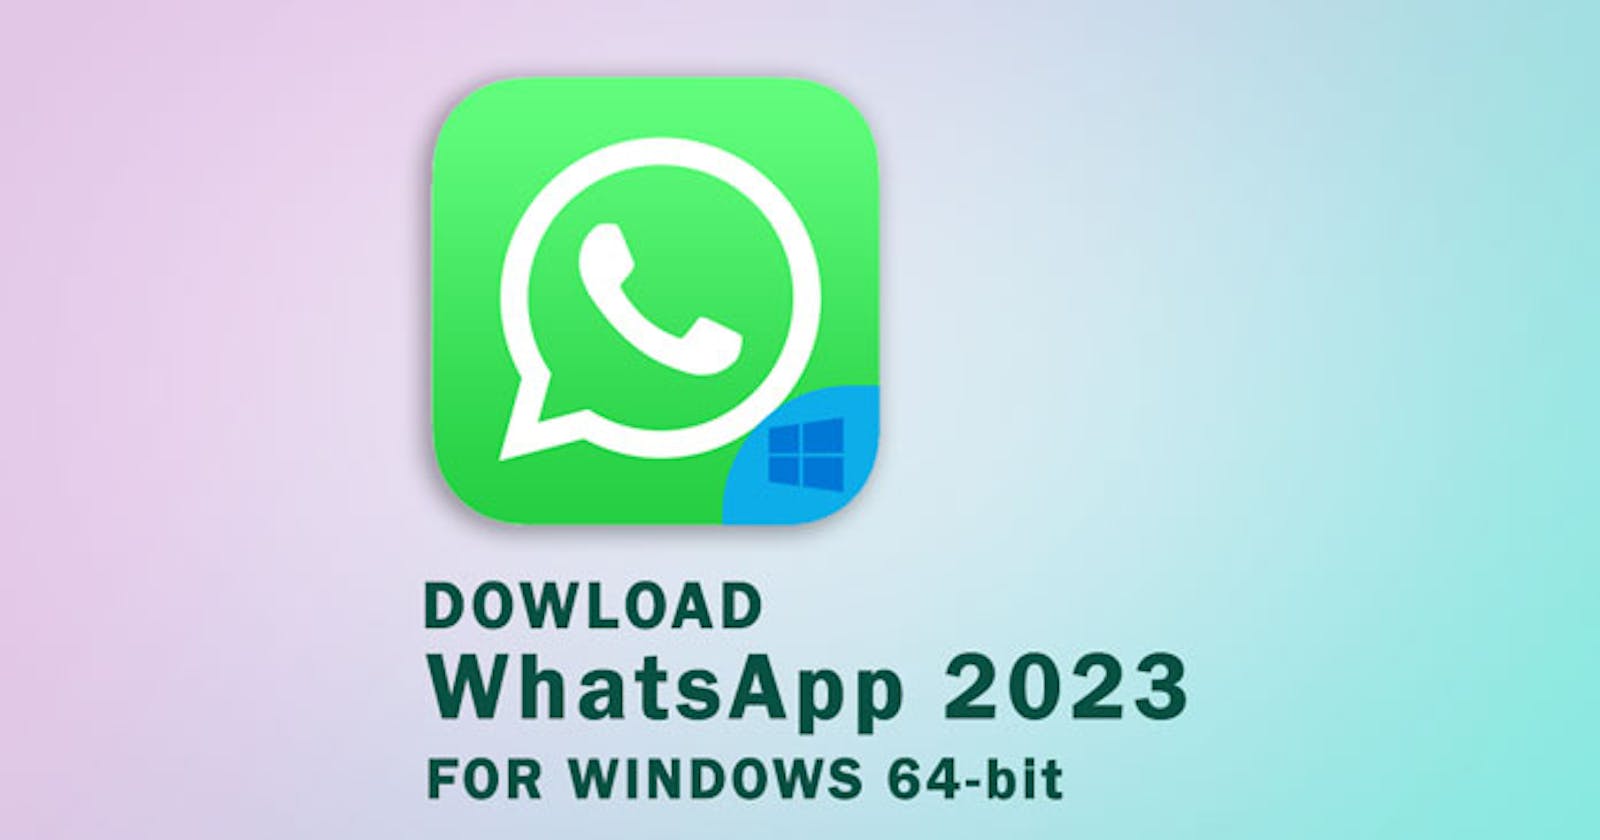 Download WhatsApp 2023 for Windows 64-bit